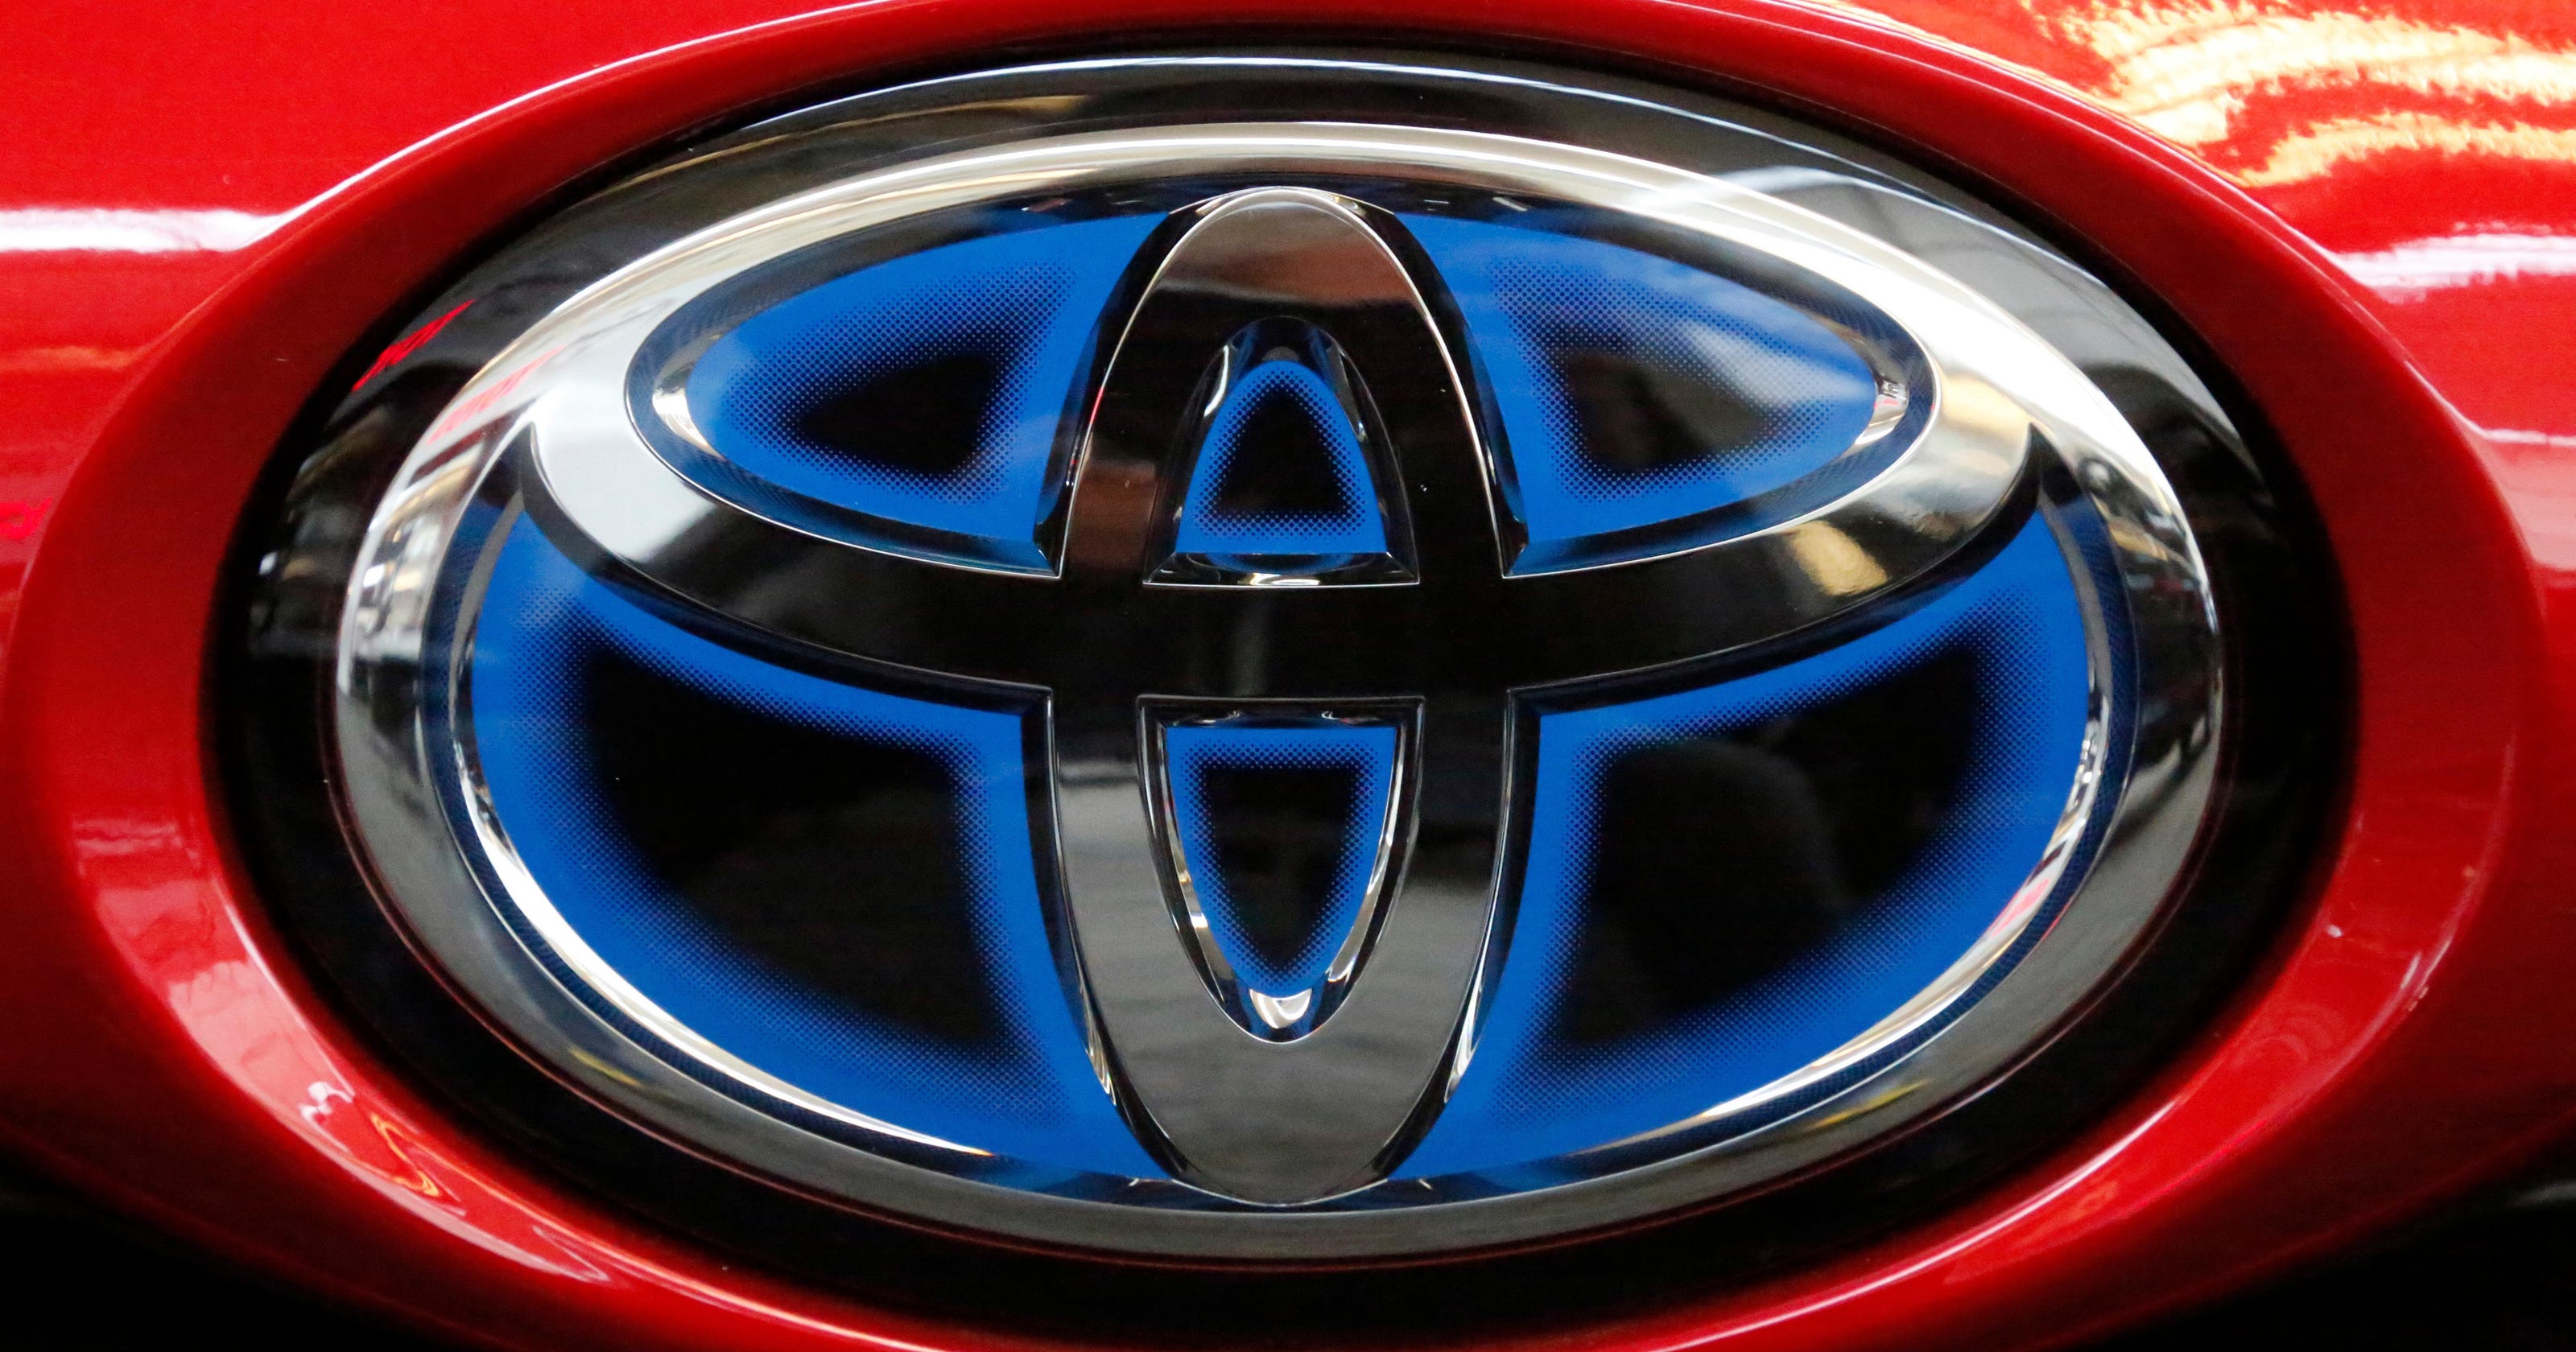 Toyota recalls over 1M vehicles to fix air bag problem